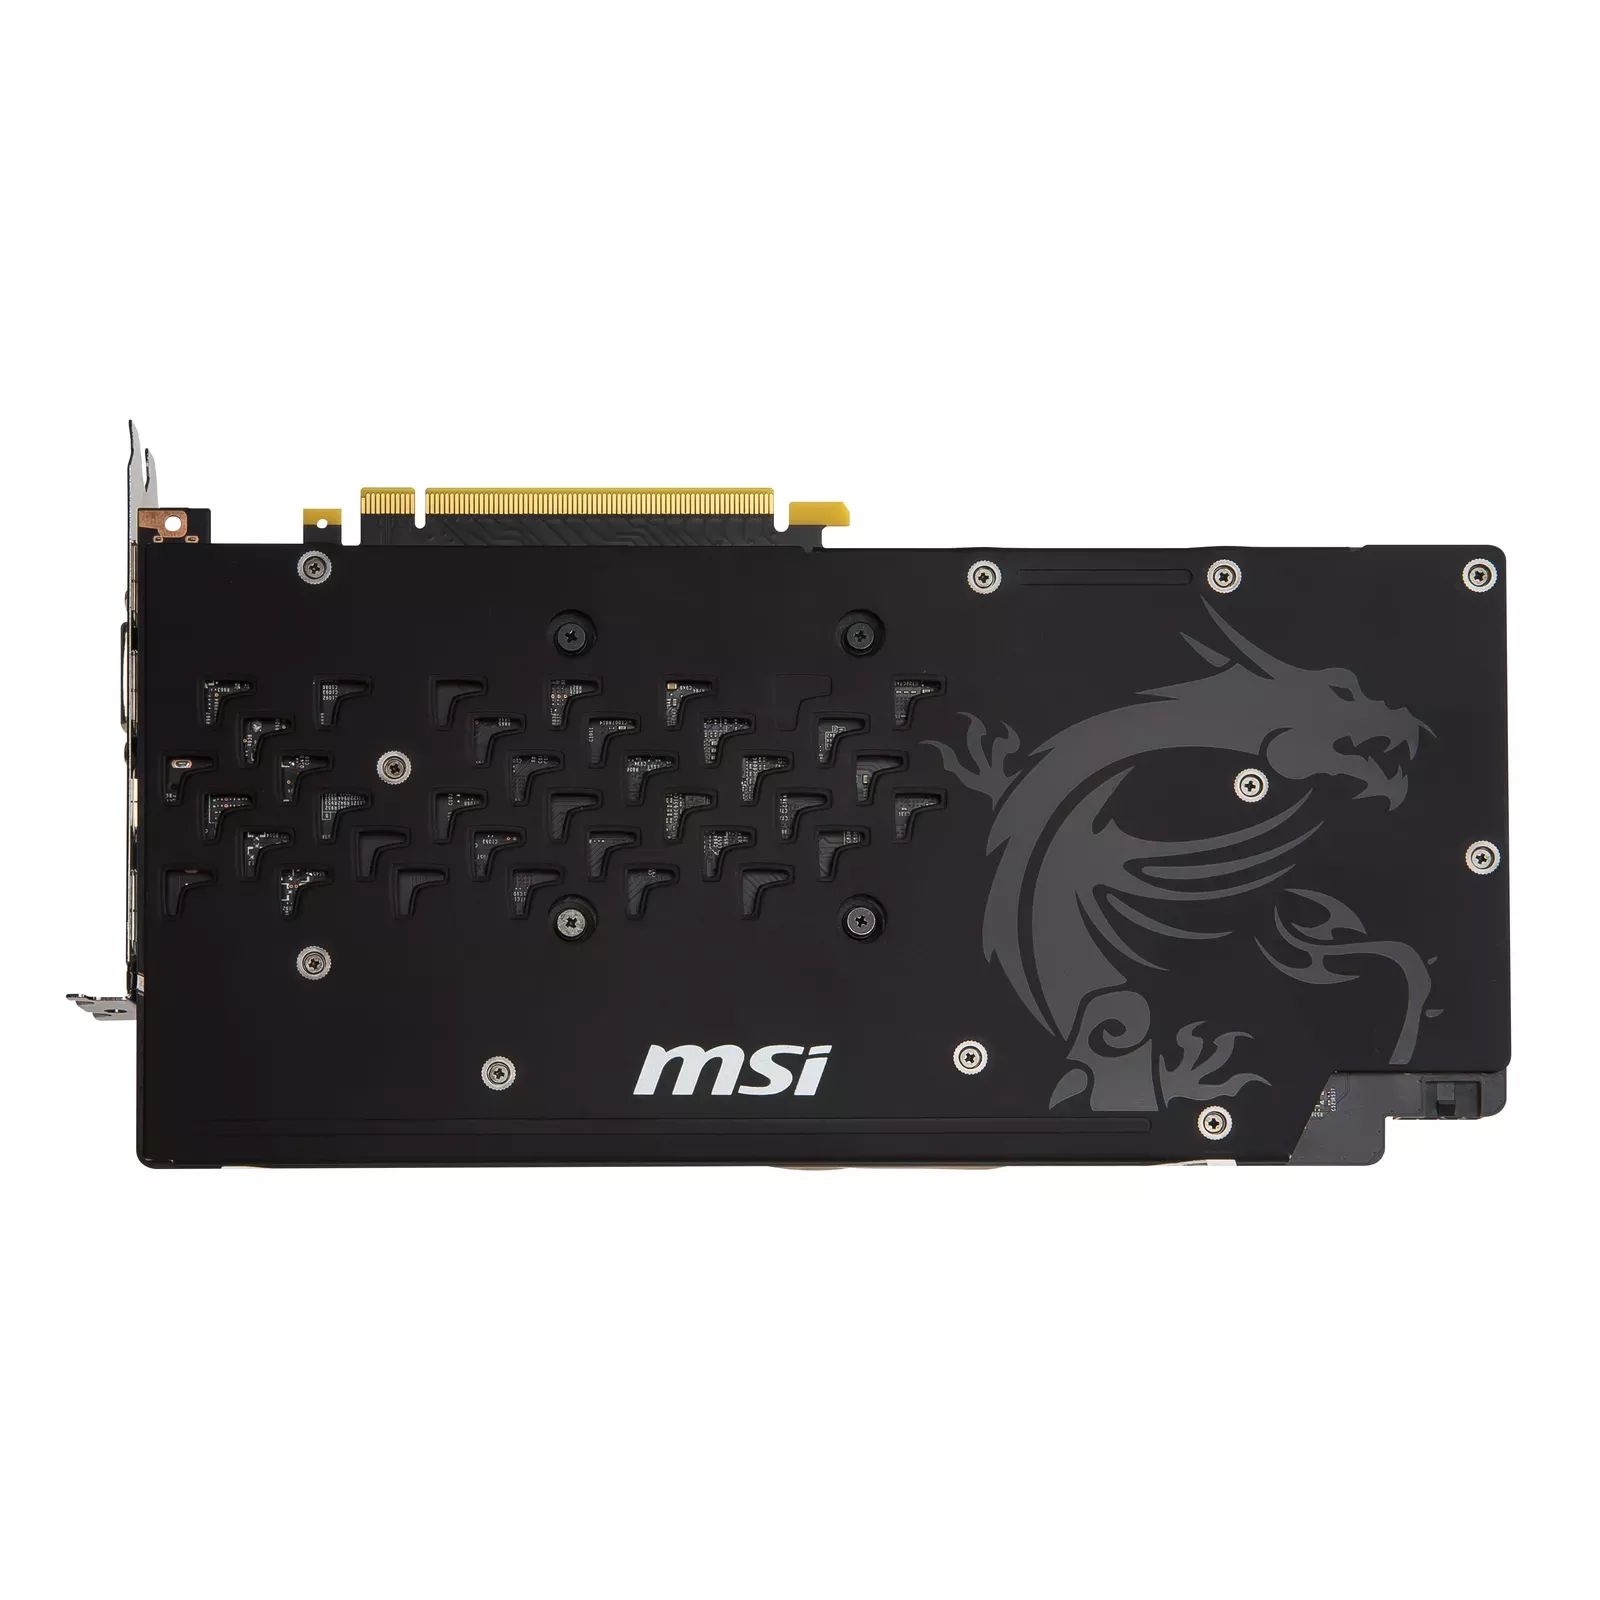 MSI GeForce GTX 1060 GAMING 6G Photo 5